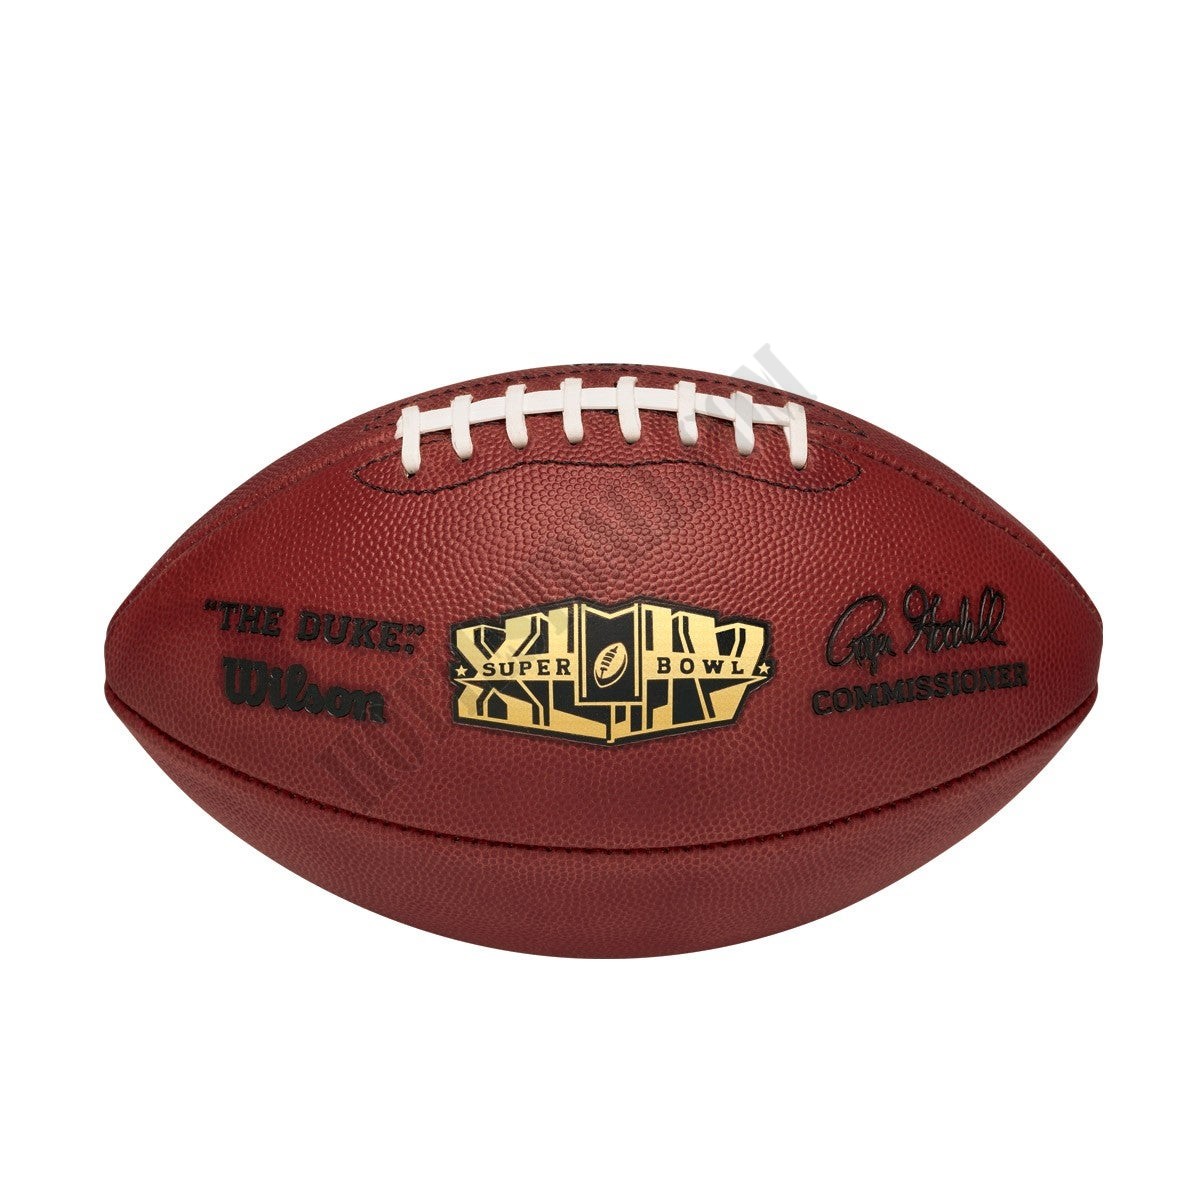 Super Bowl XLIV Game Football - New Orleans Saints ● Wilson Promotions - -0